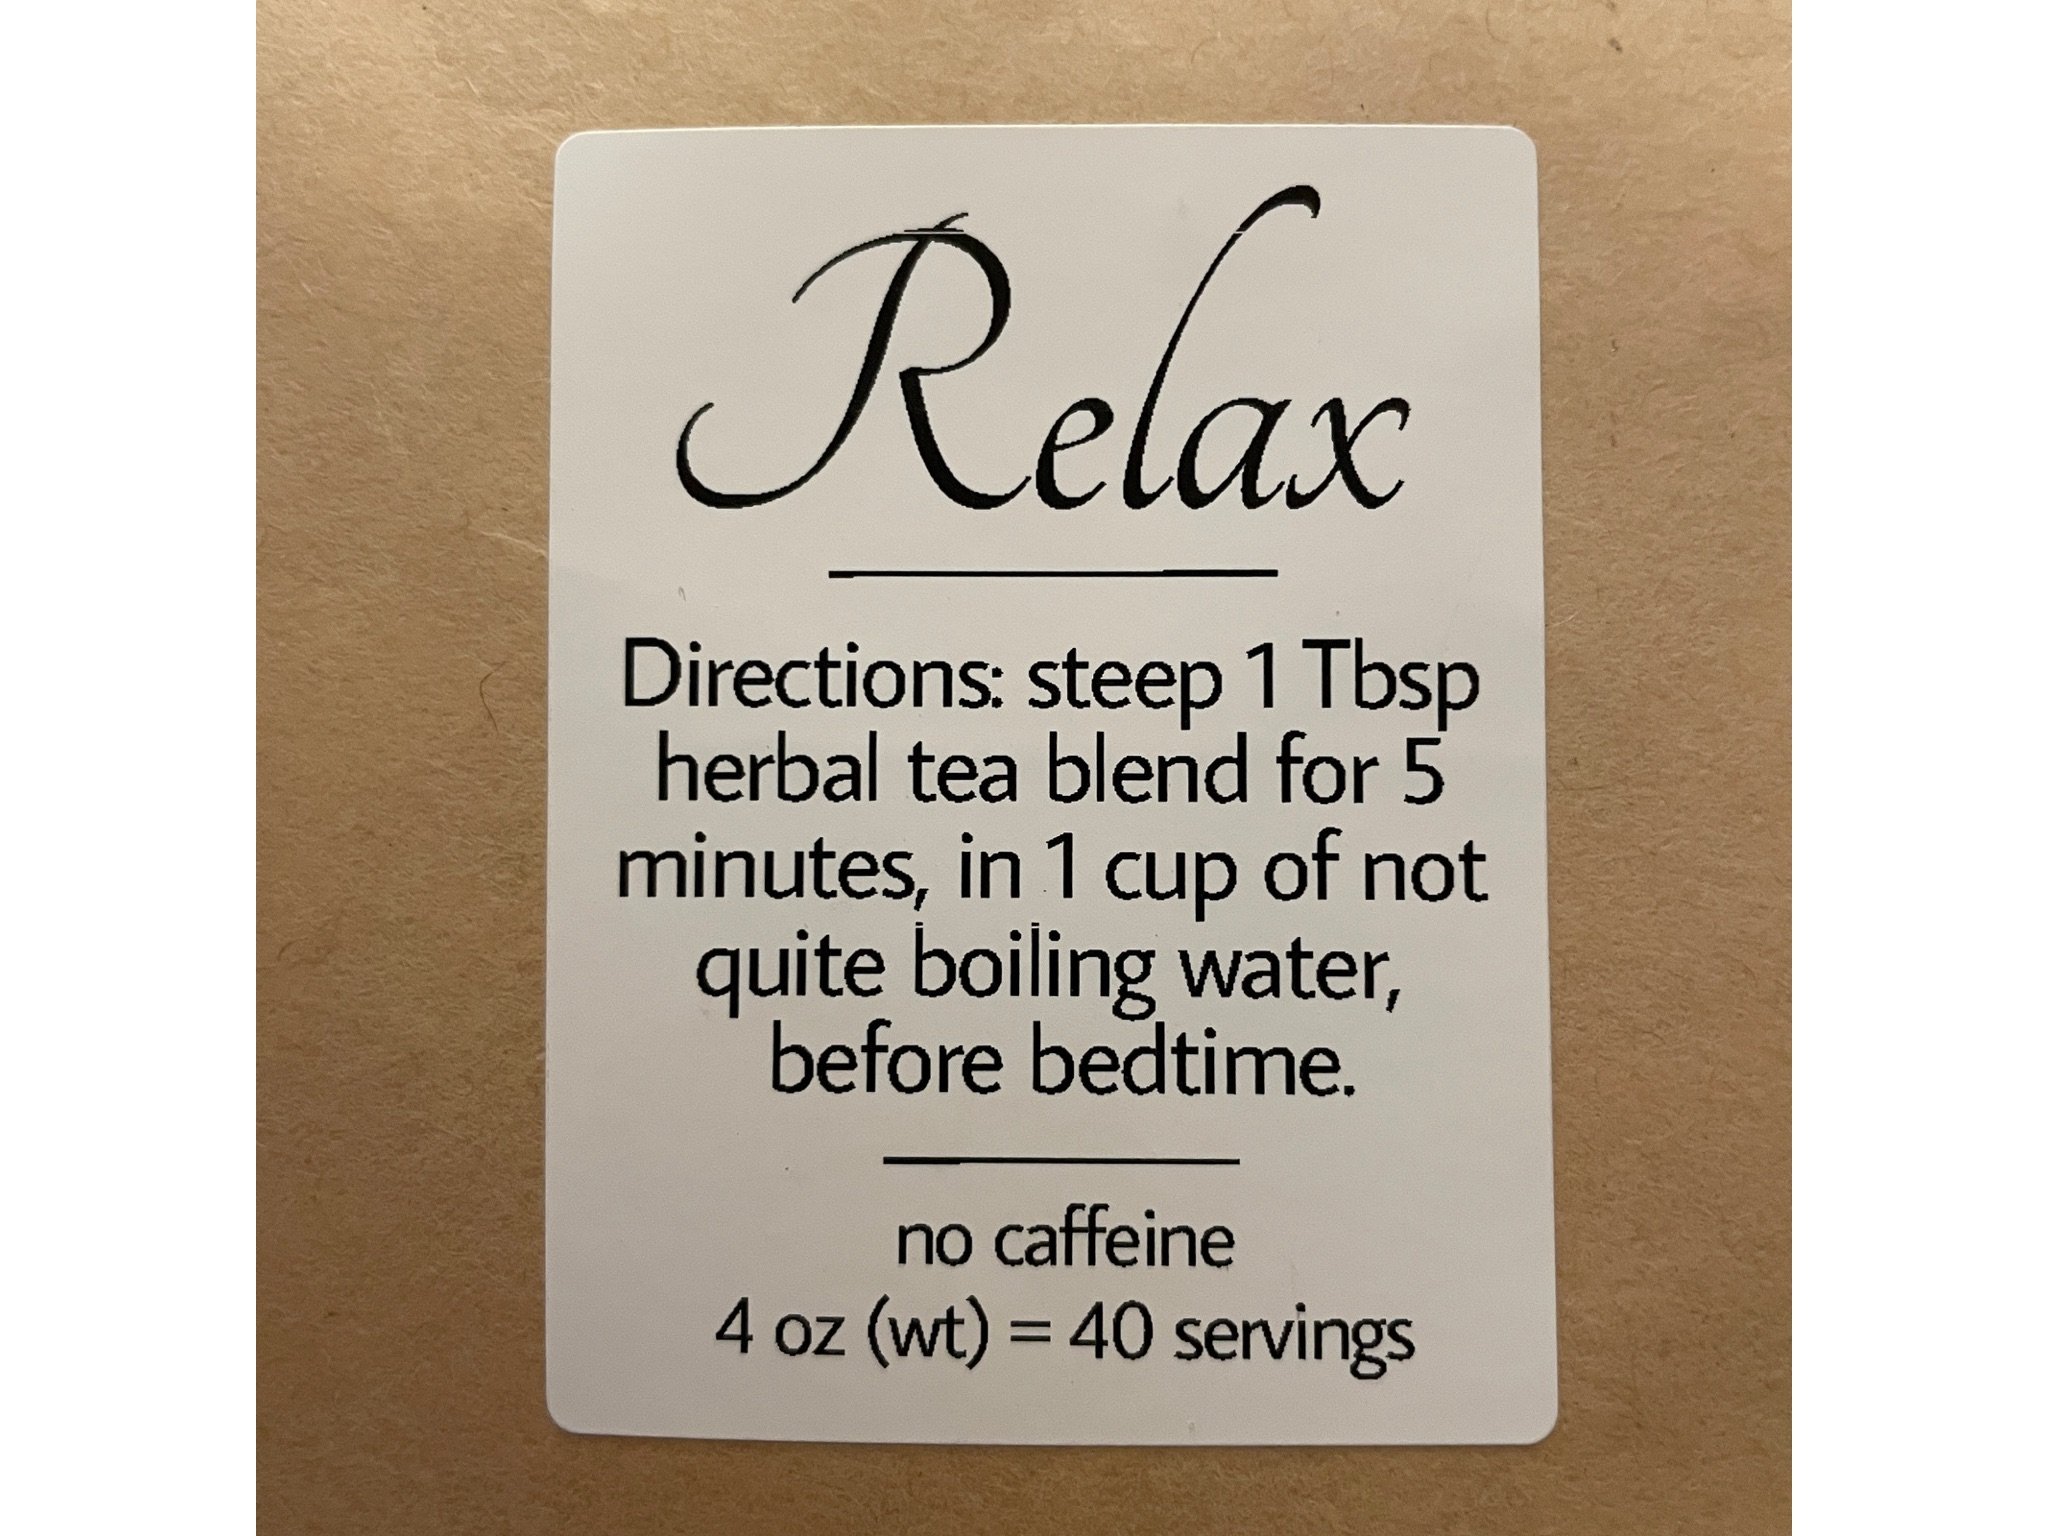 Relax Herbal Tea (Copy) (Copy) (Copy) (Copy)